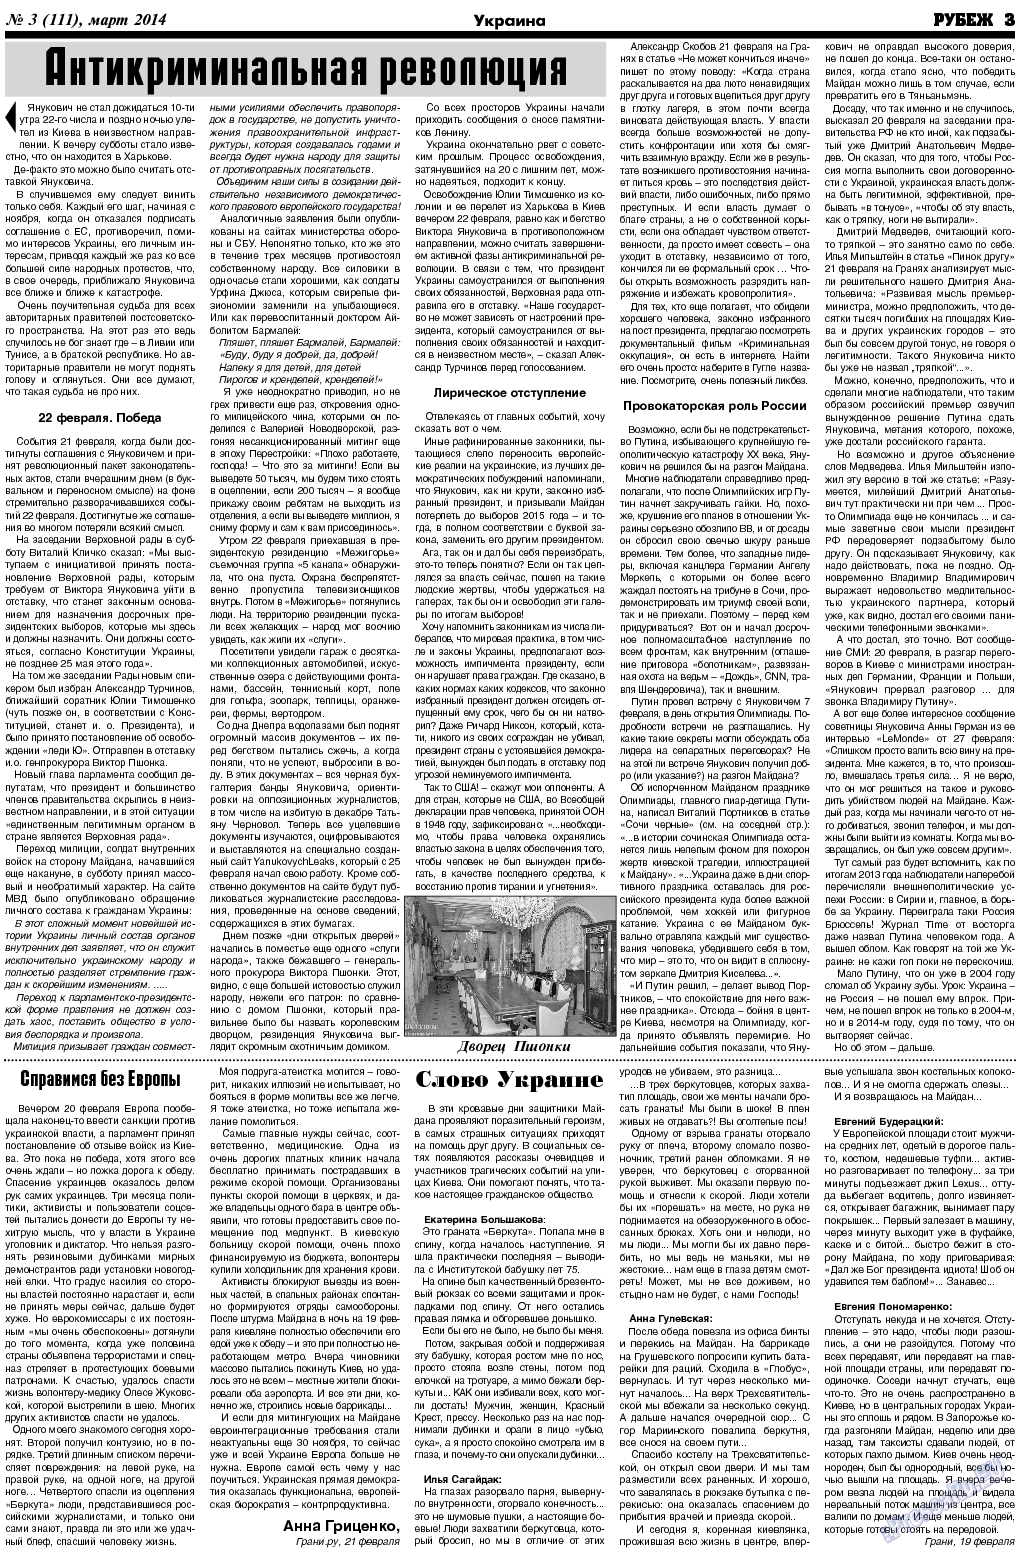 Рубеж, газета. 2014 №3 стр.3